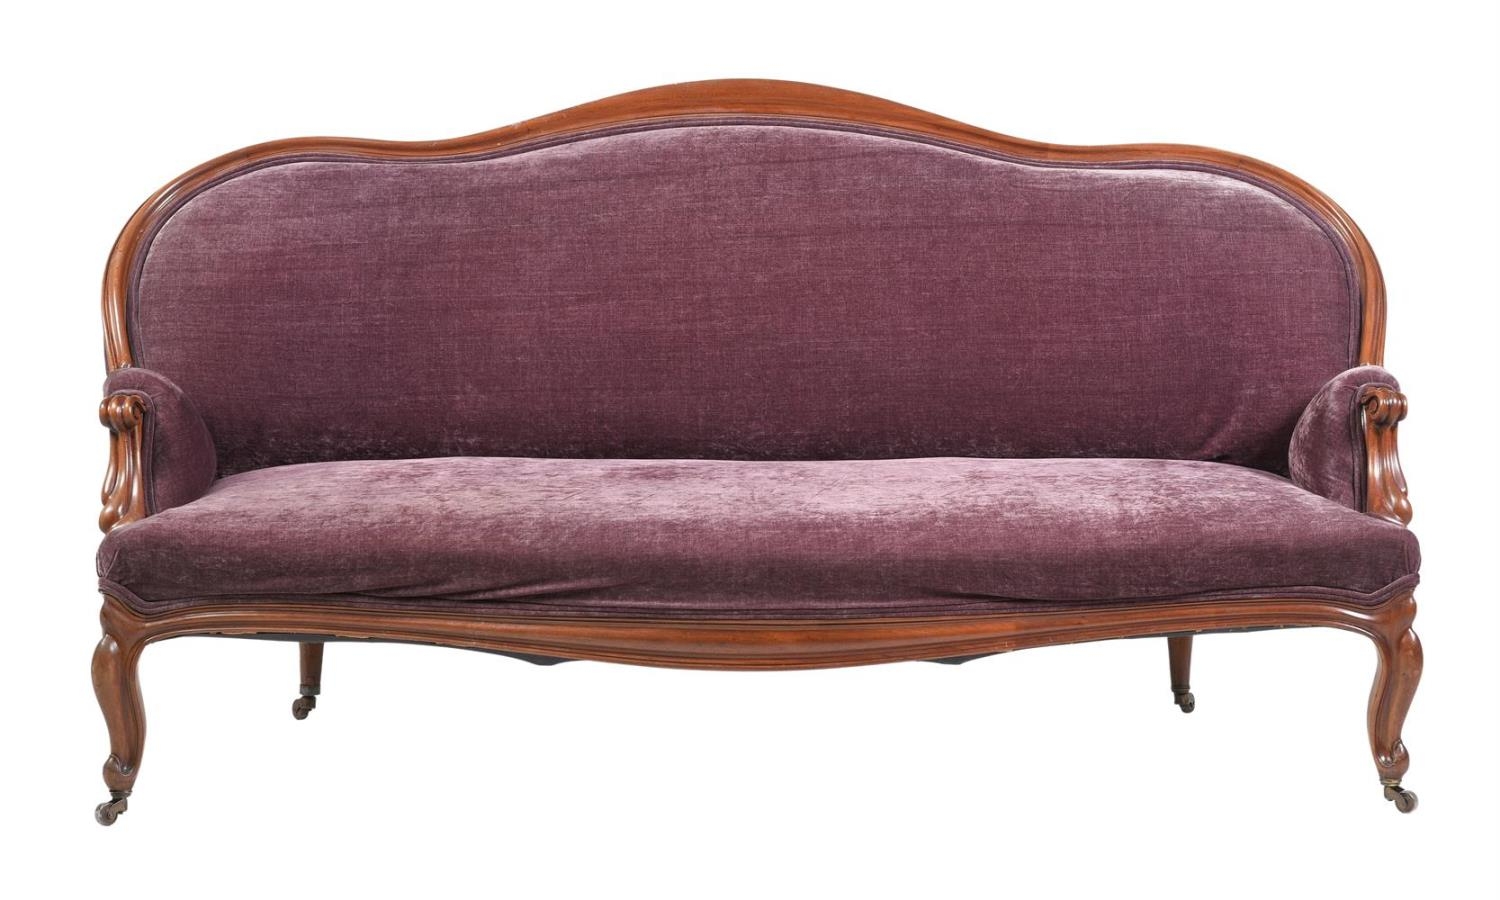 A Victorian mahogany and upholstered sofa, upholstered in plum coloured velvet, 106cm high, 196cm